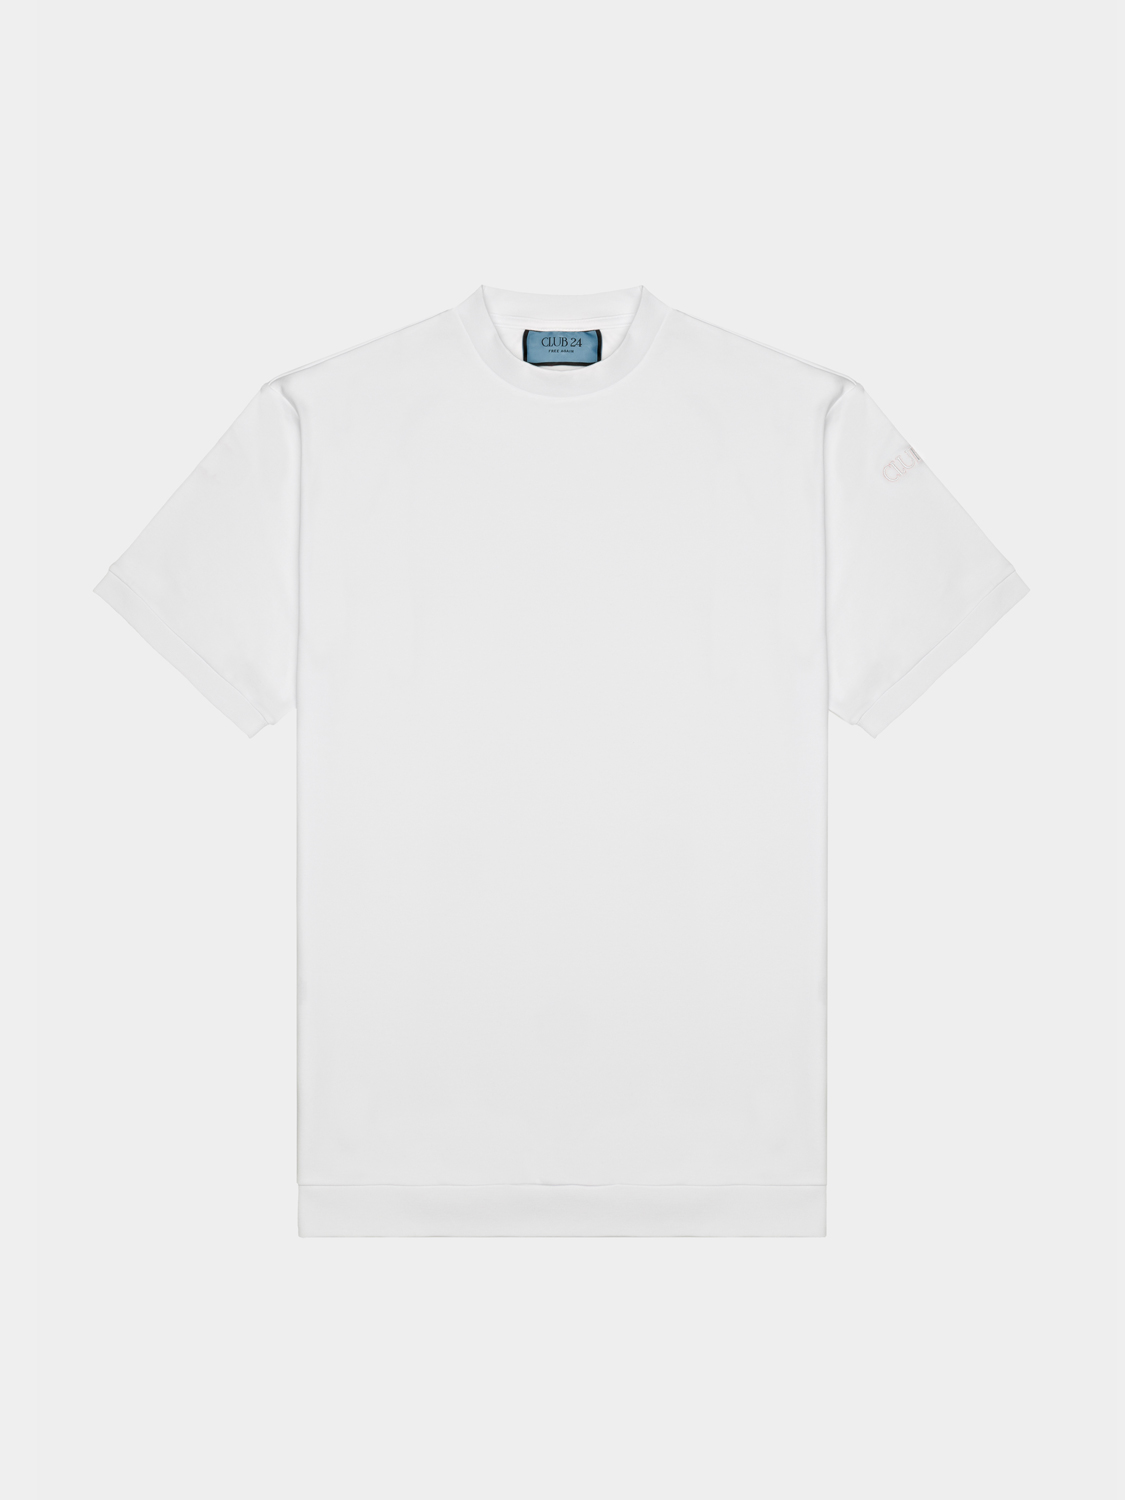 Freedom Fit T-Shirt - Sensational White